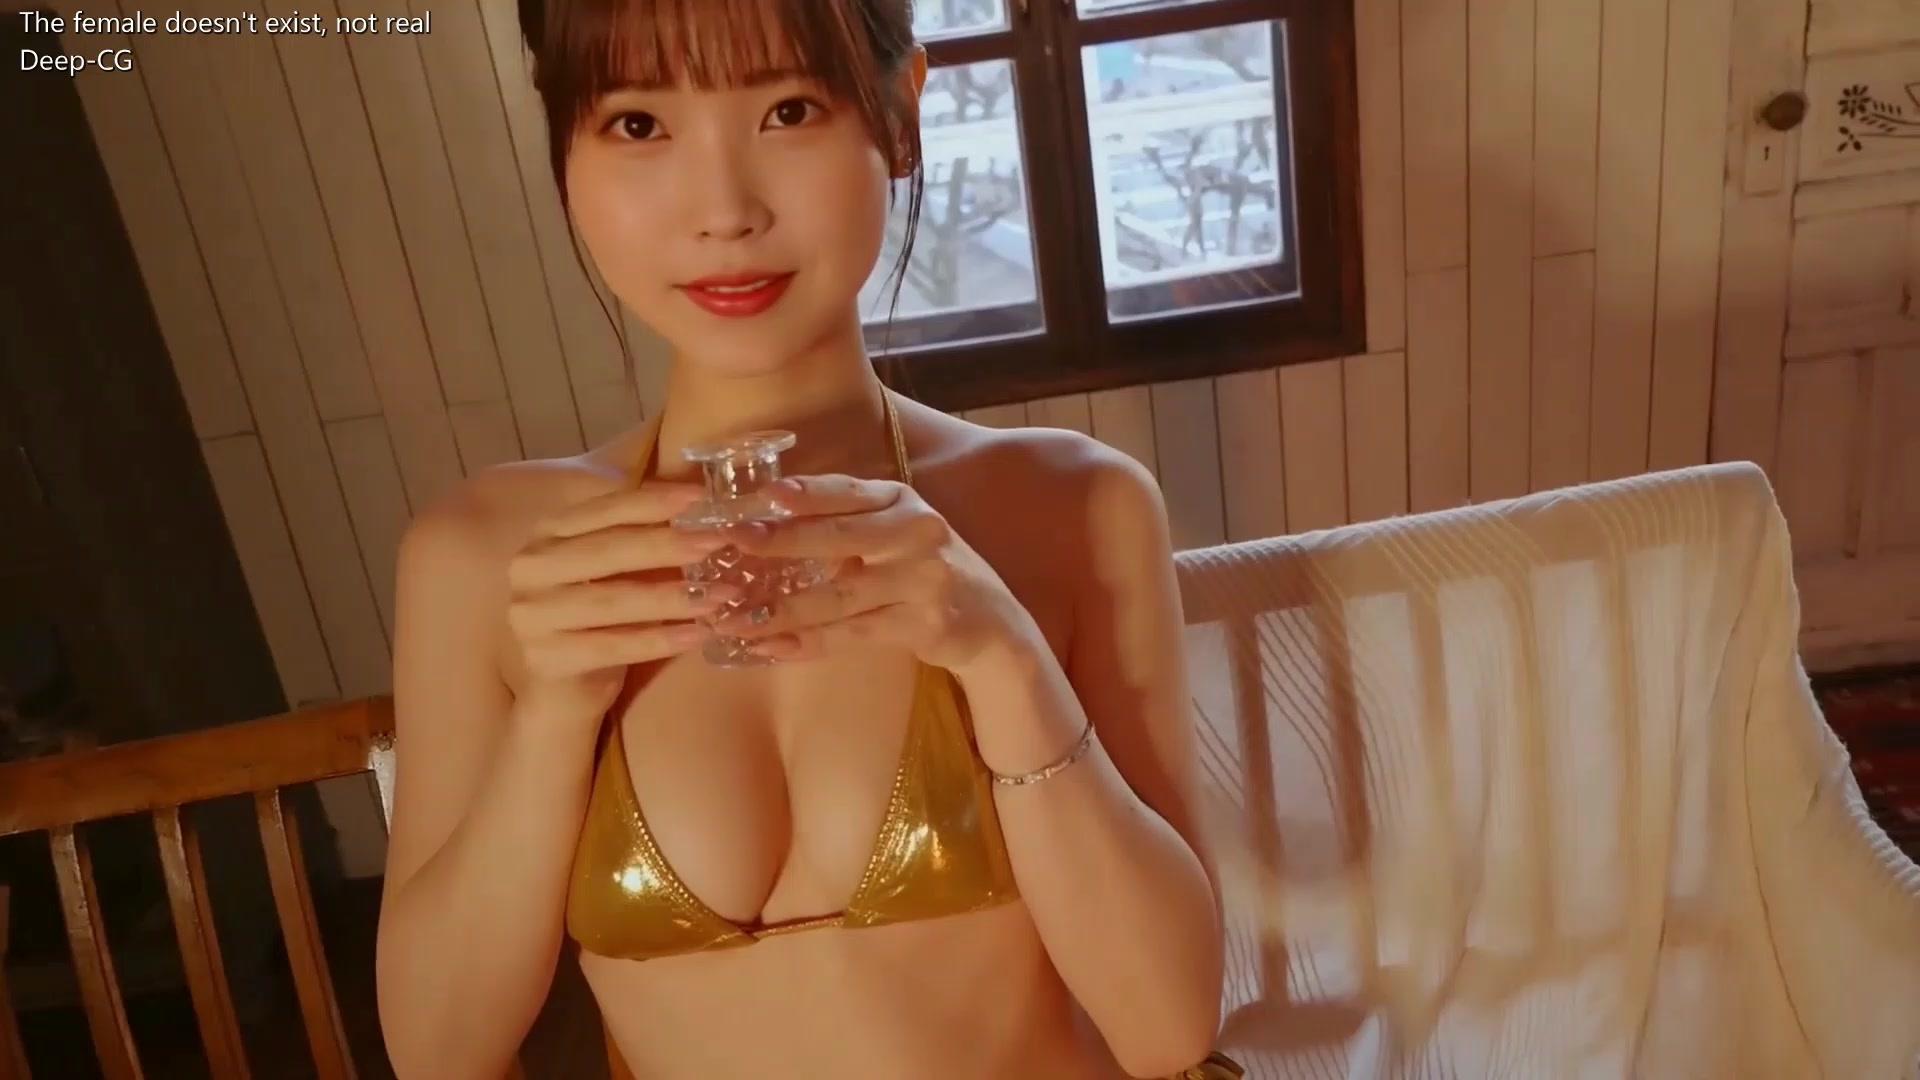 IU dirty talks in golden sexy bikini - deepfake porn (아이유 섹스 장면) [PREMIUM]